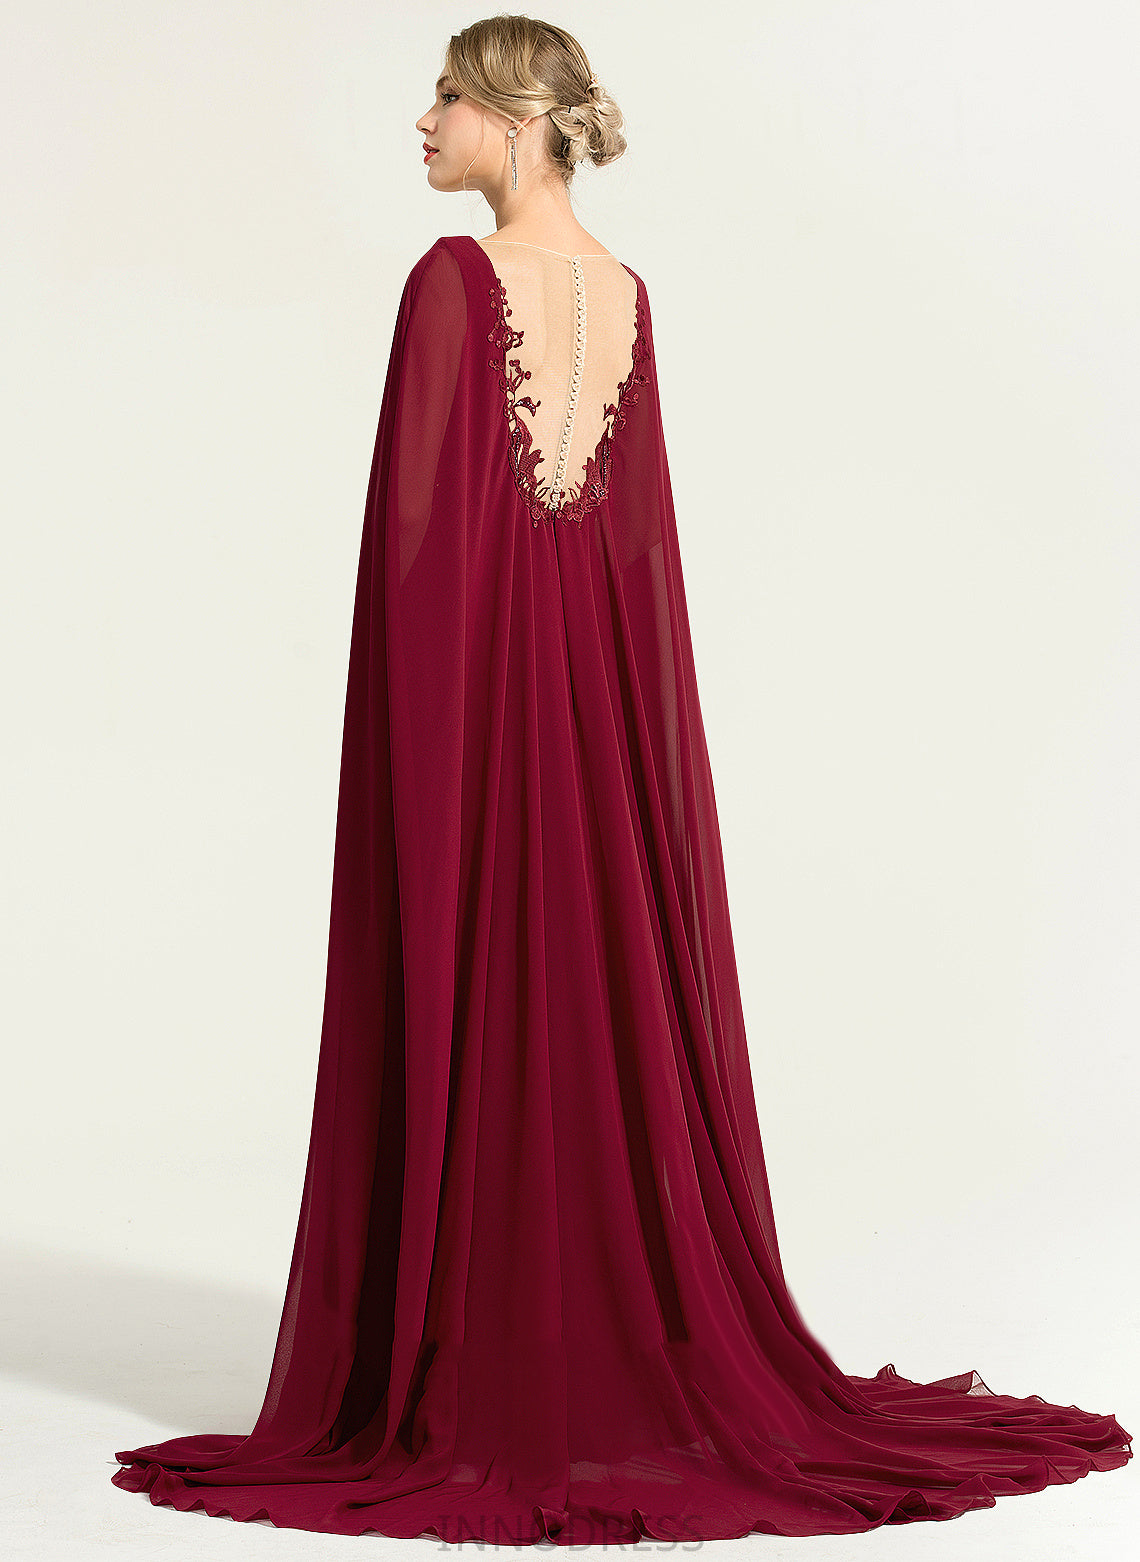 Dress Wedding Chiffon A-Line Wedding Dresses Floor-Length Lace V-neck Sequins Lilyana With